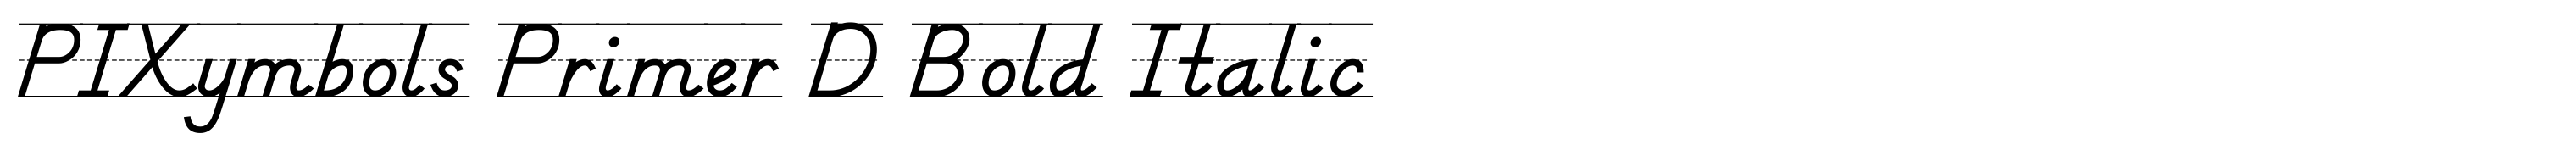 PIXymbols Primer D Bold Italic